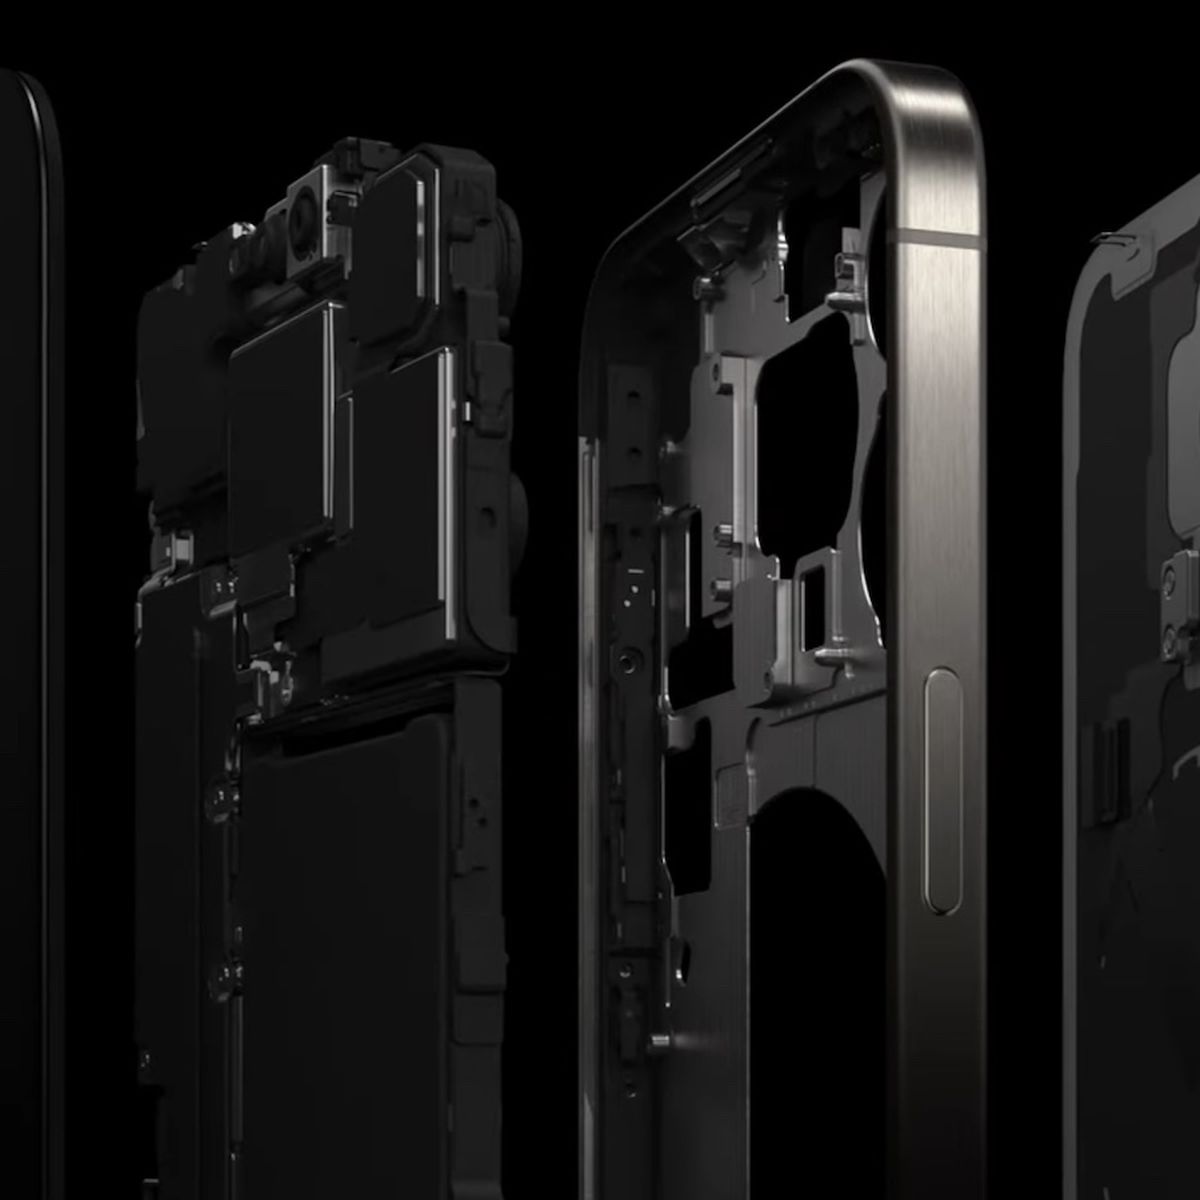 iPhone 15 Pro has Qualcomm modem, repairable phone frame: Analysis